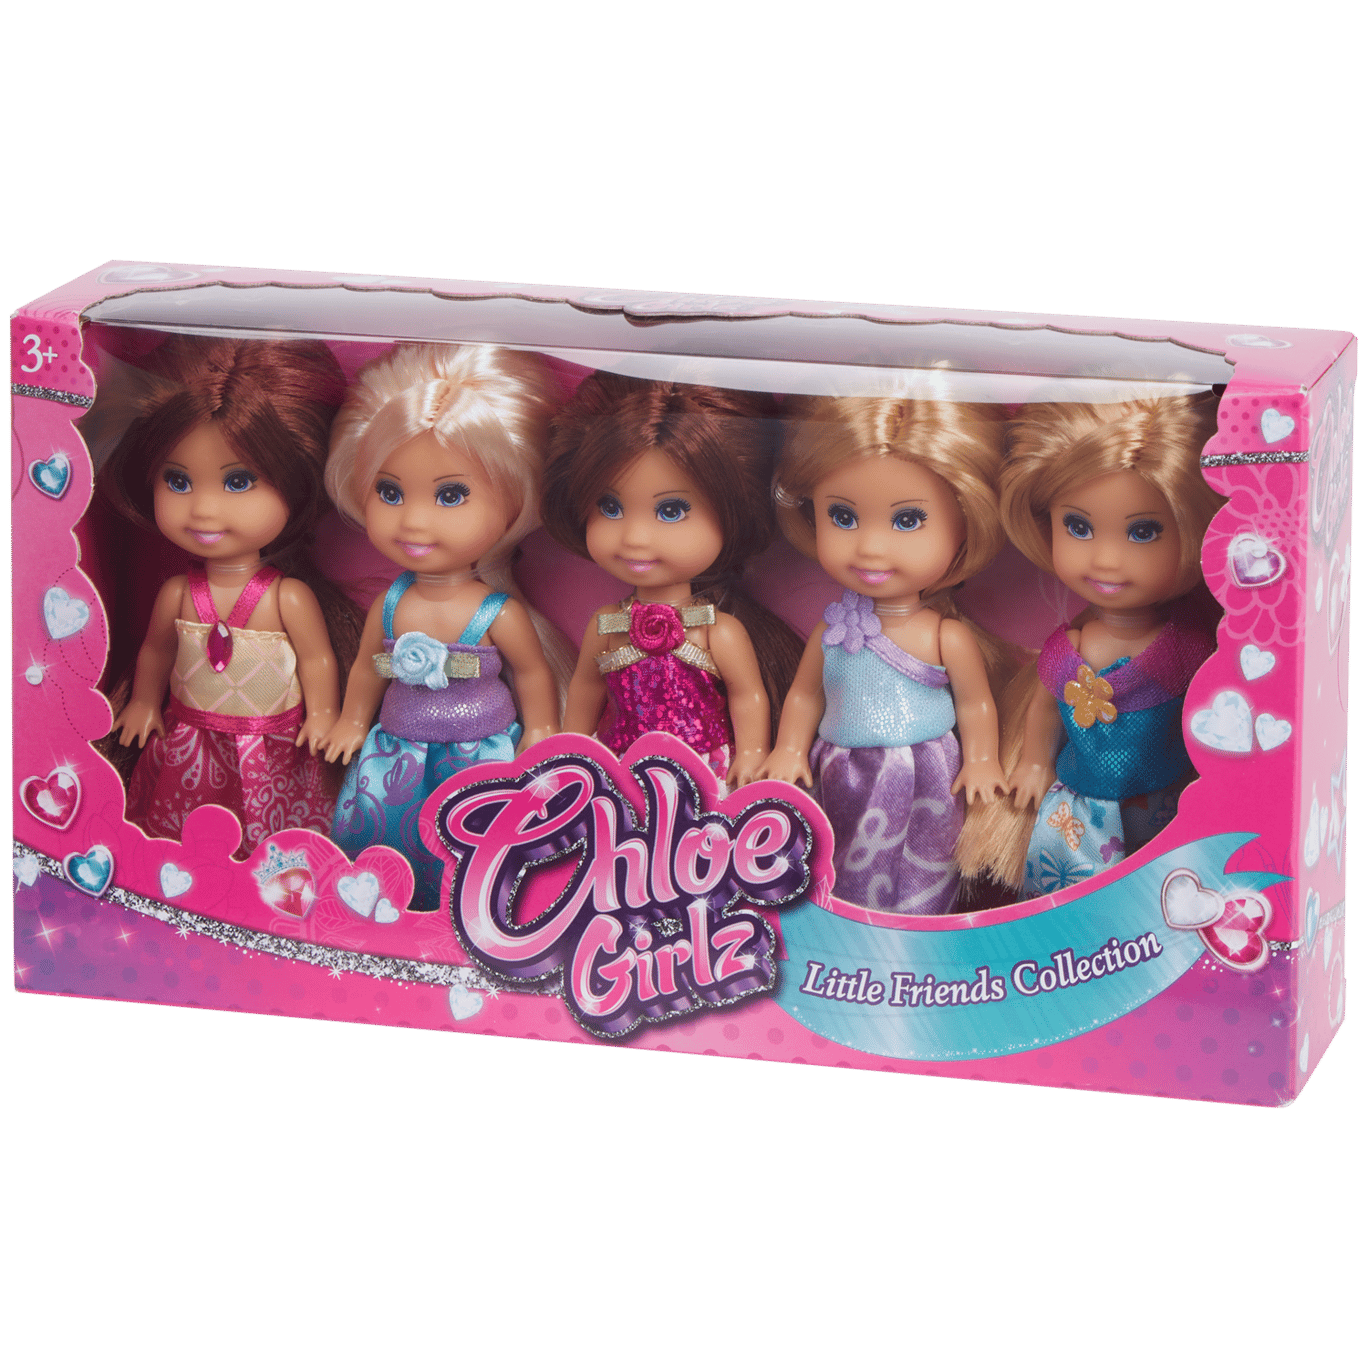 Conjunto de bonecas Chloe Girlz